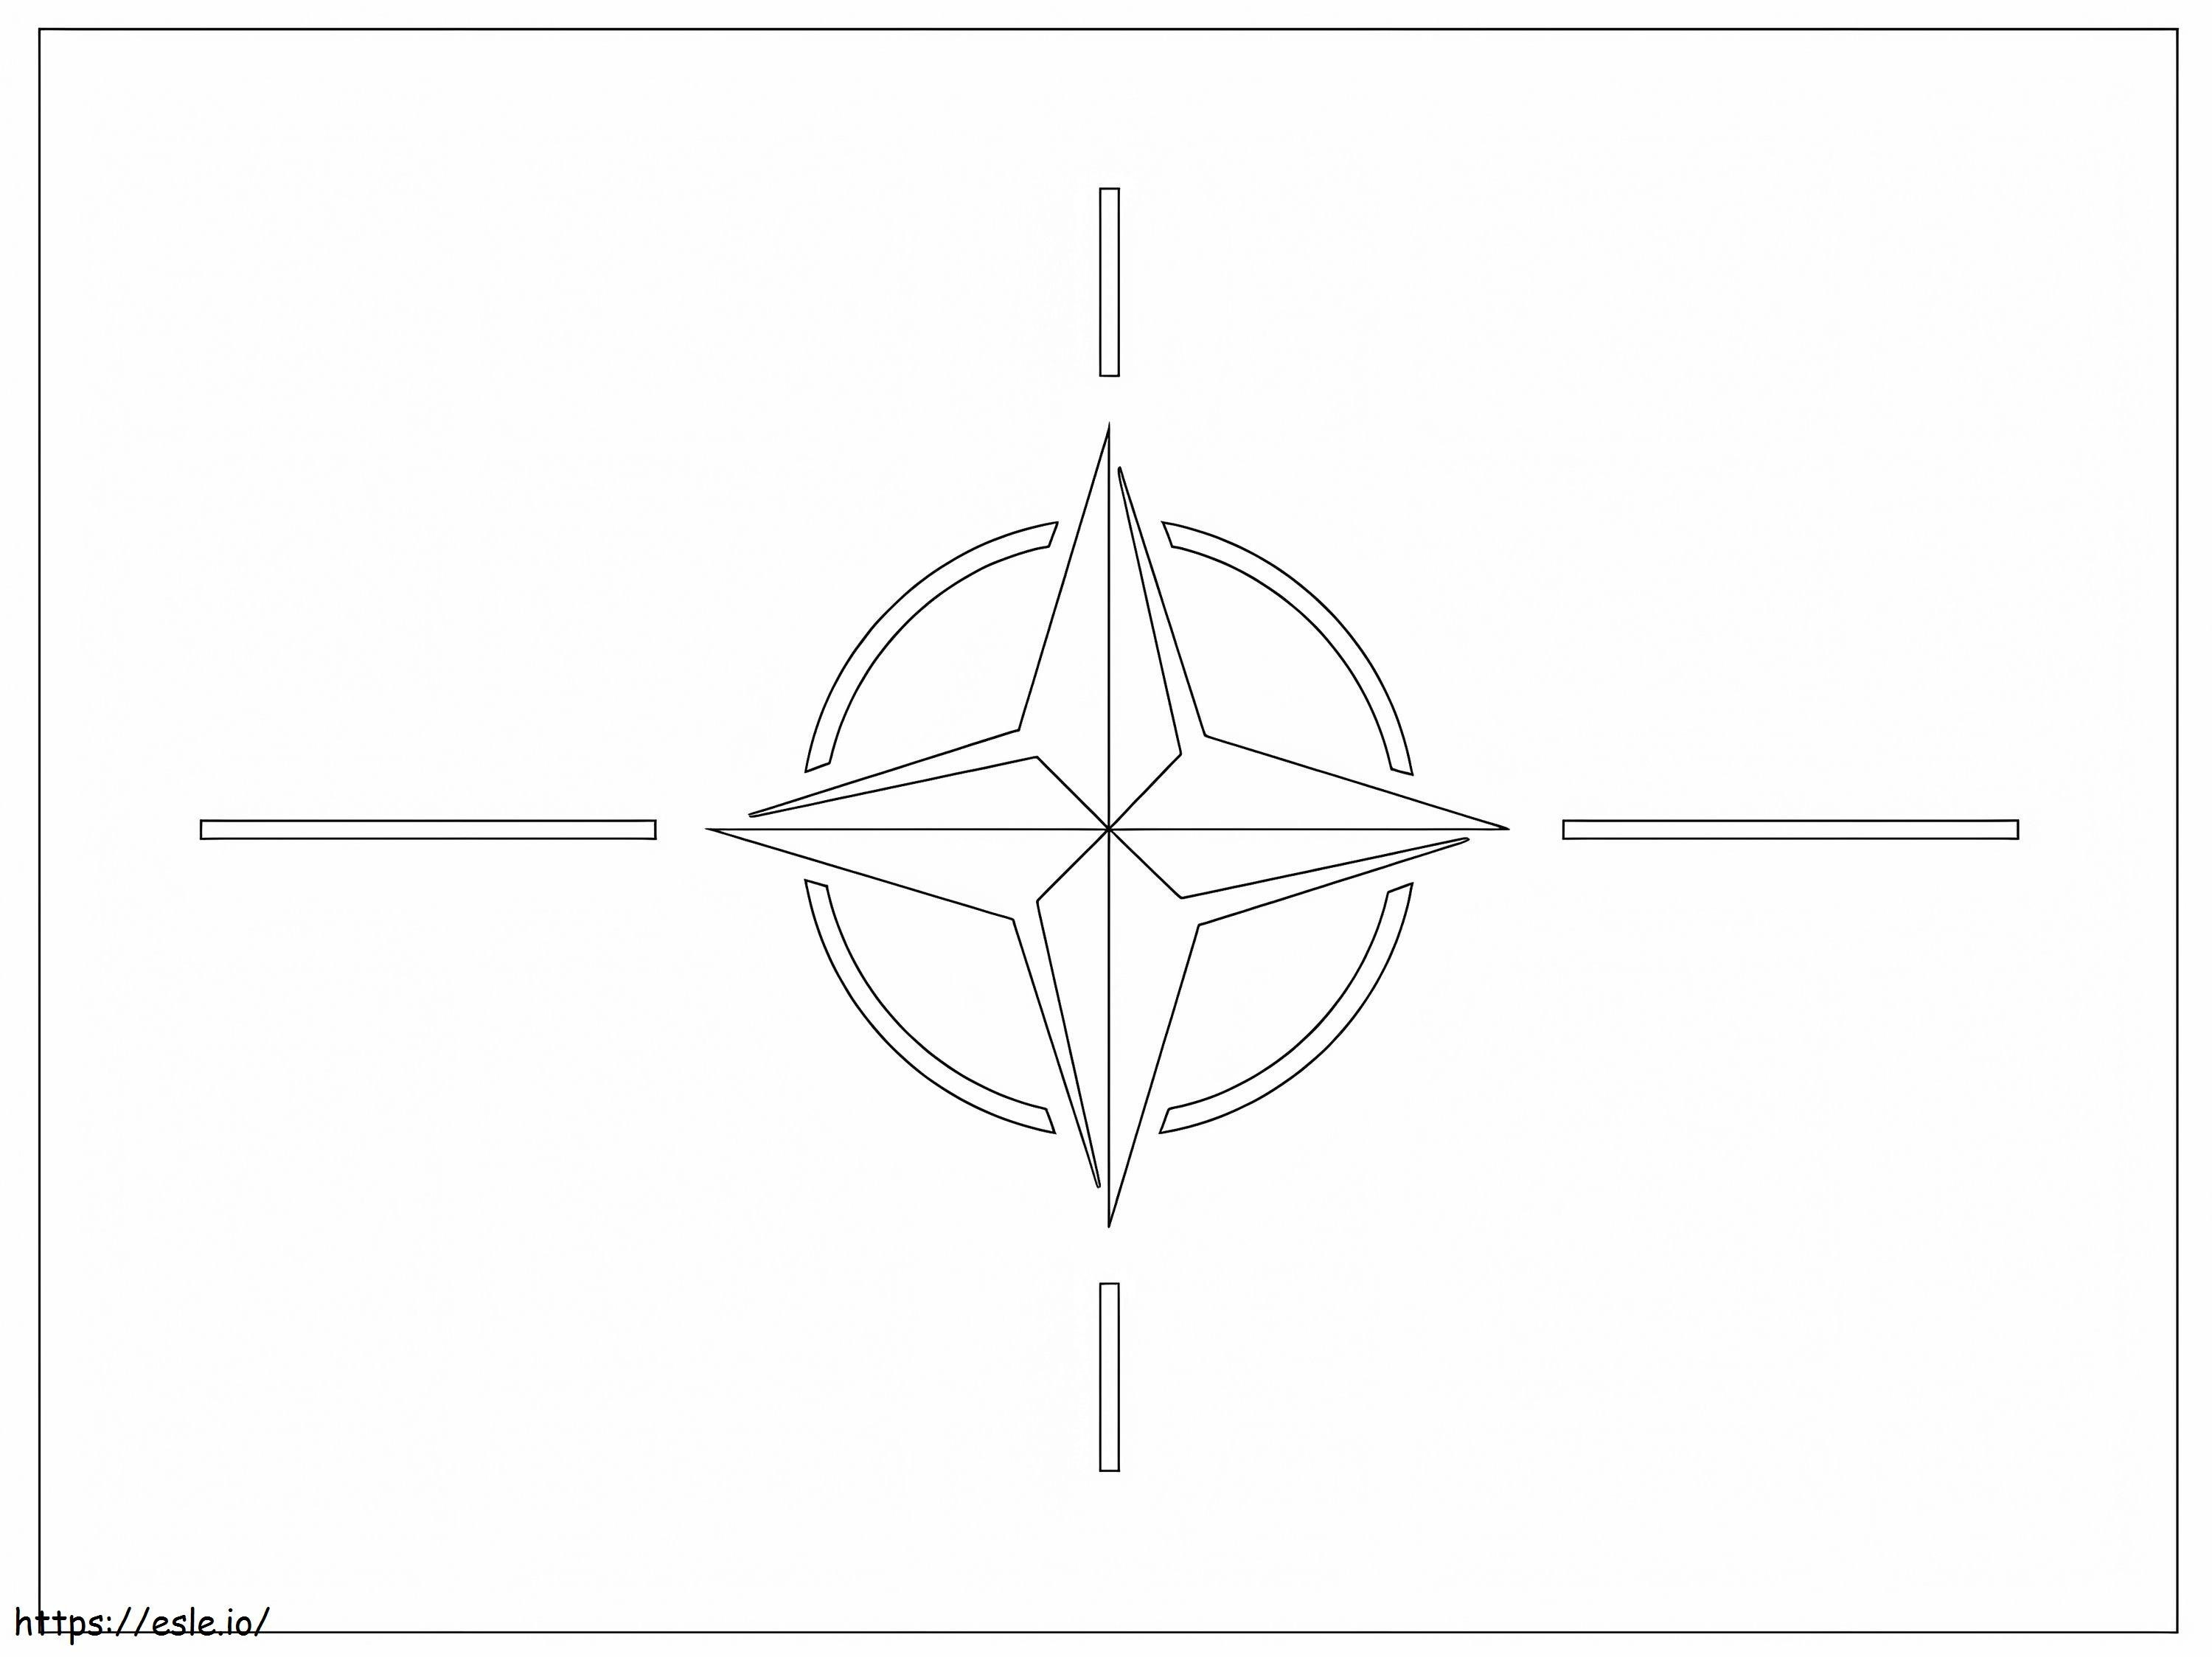 Coloriage Drapeau de l'OTAN à imprimer dessin